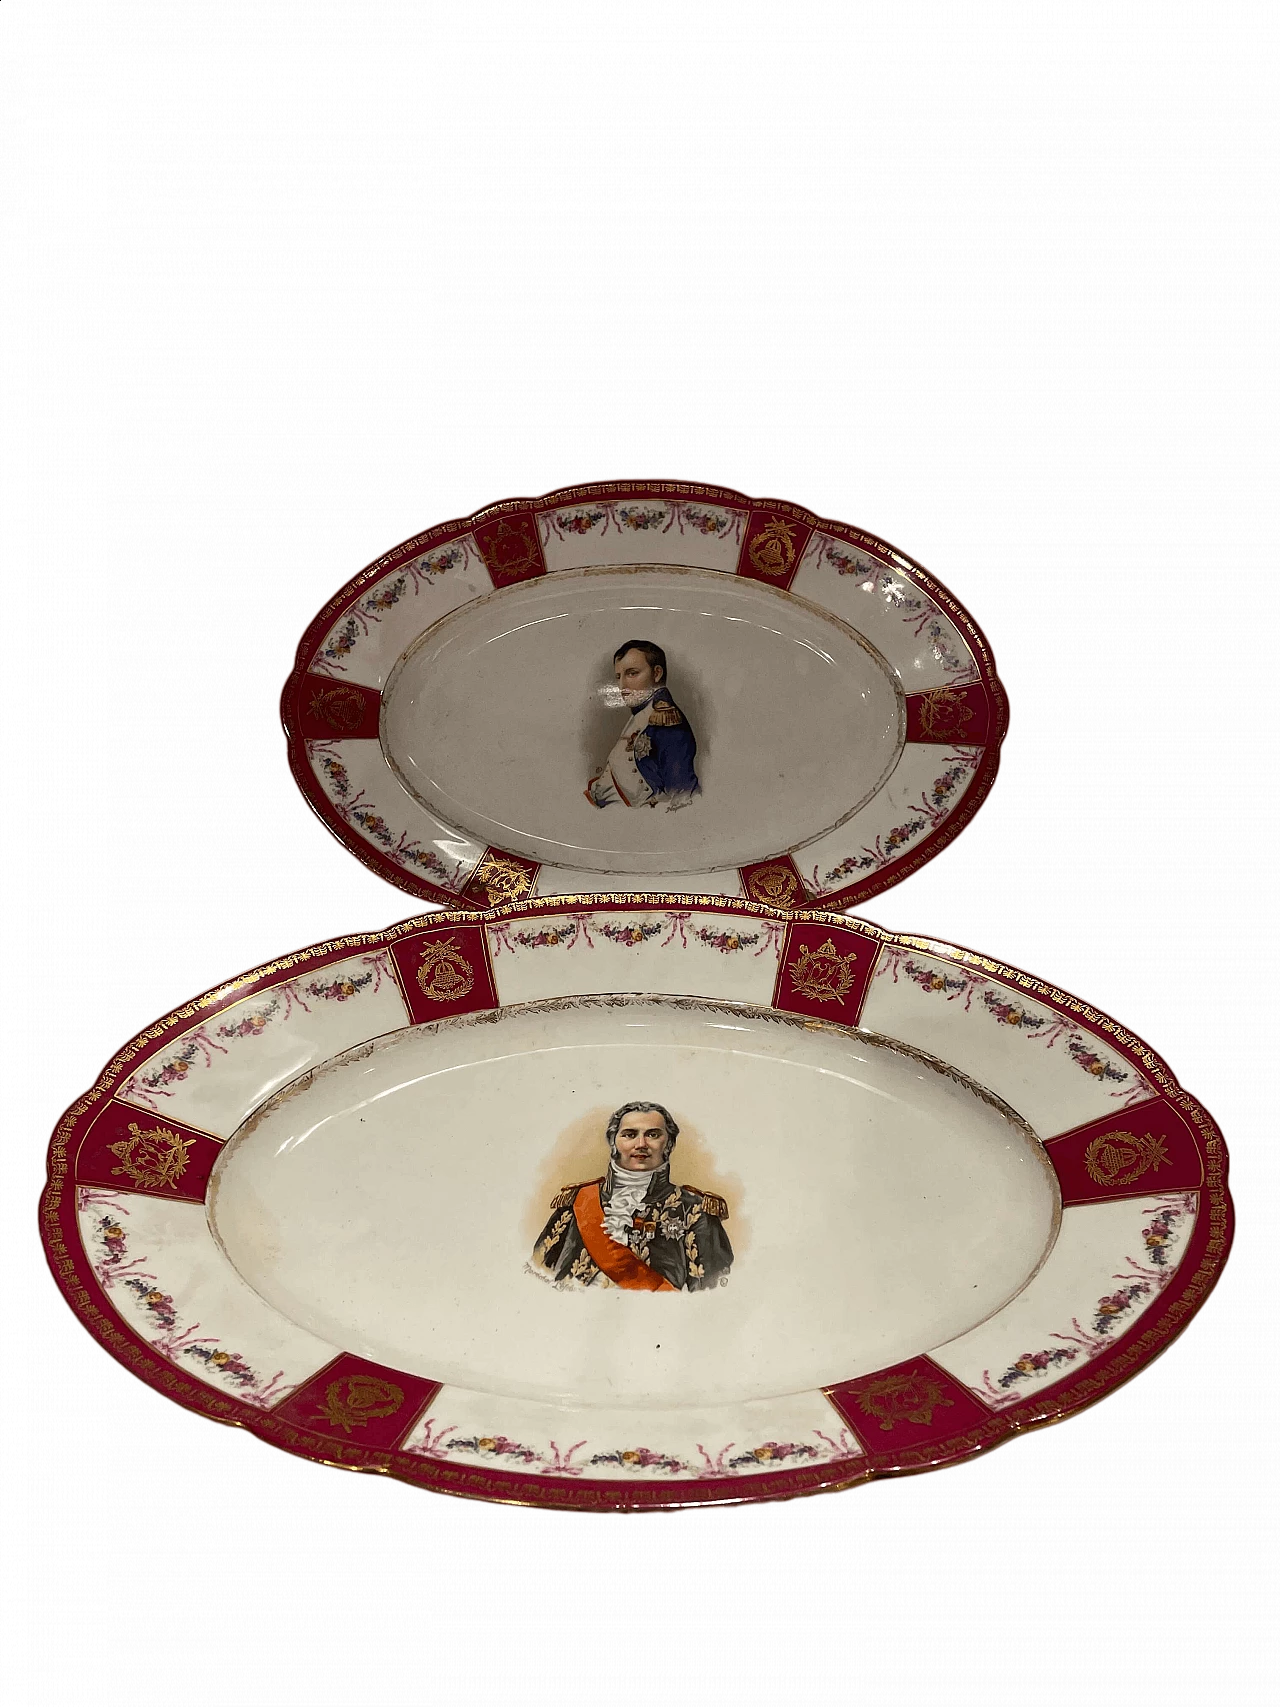 Pair of porcelain plates with portrait of Napoleon by KPM 14